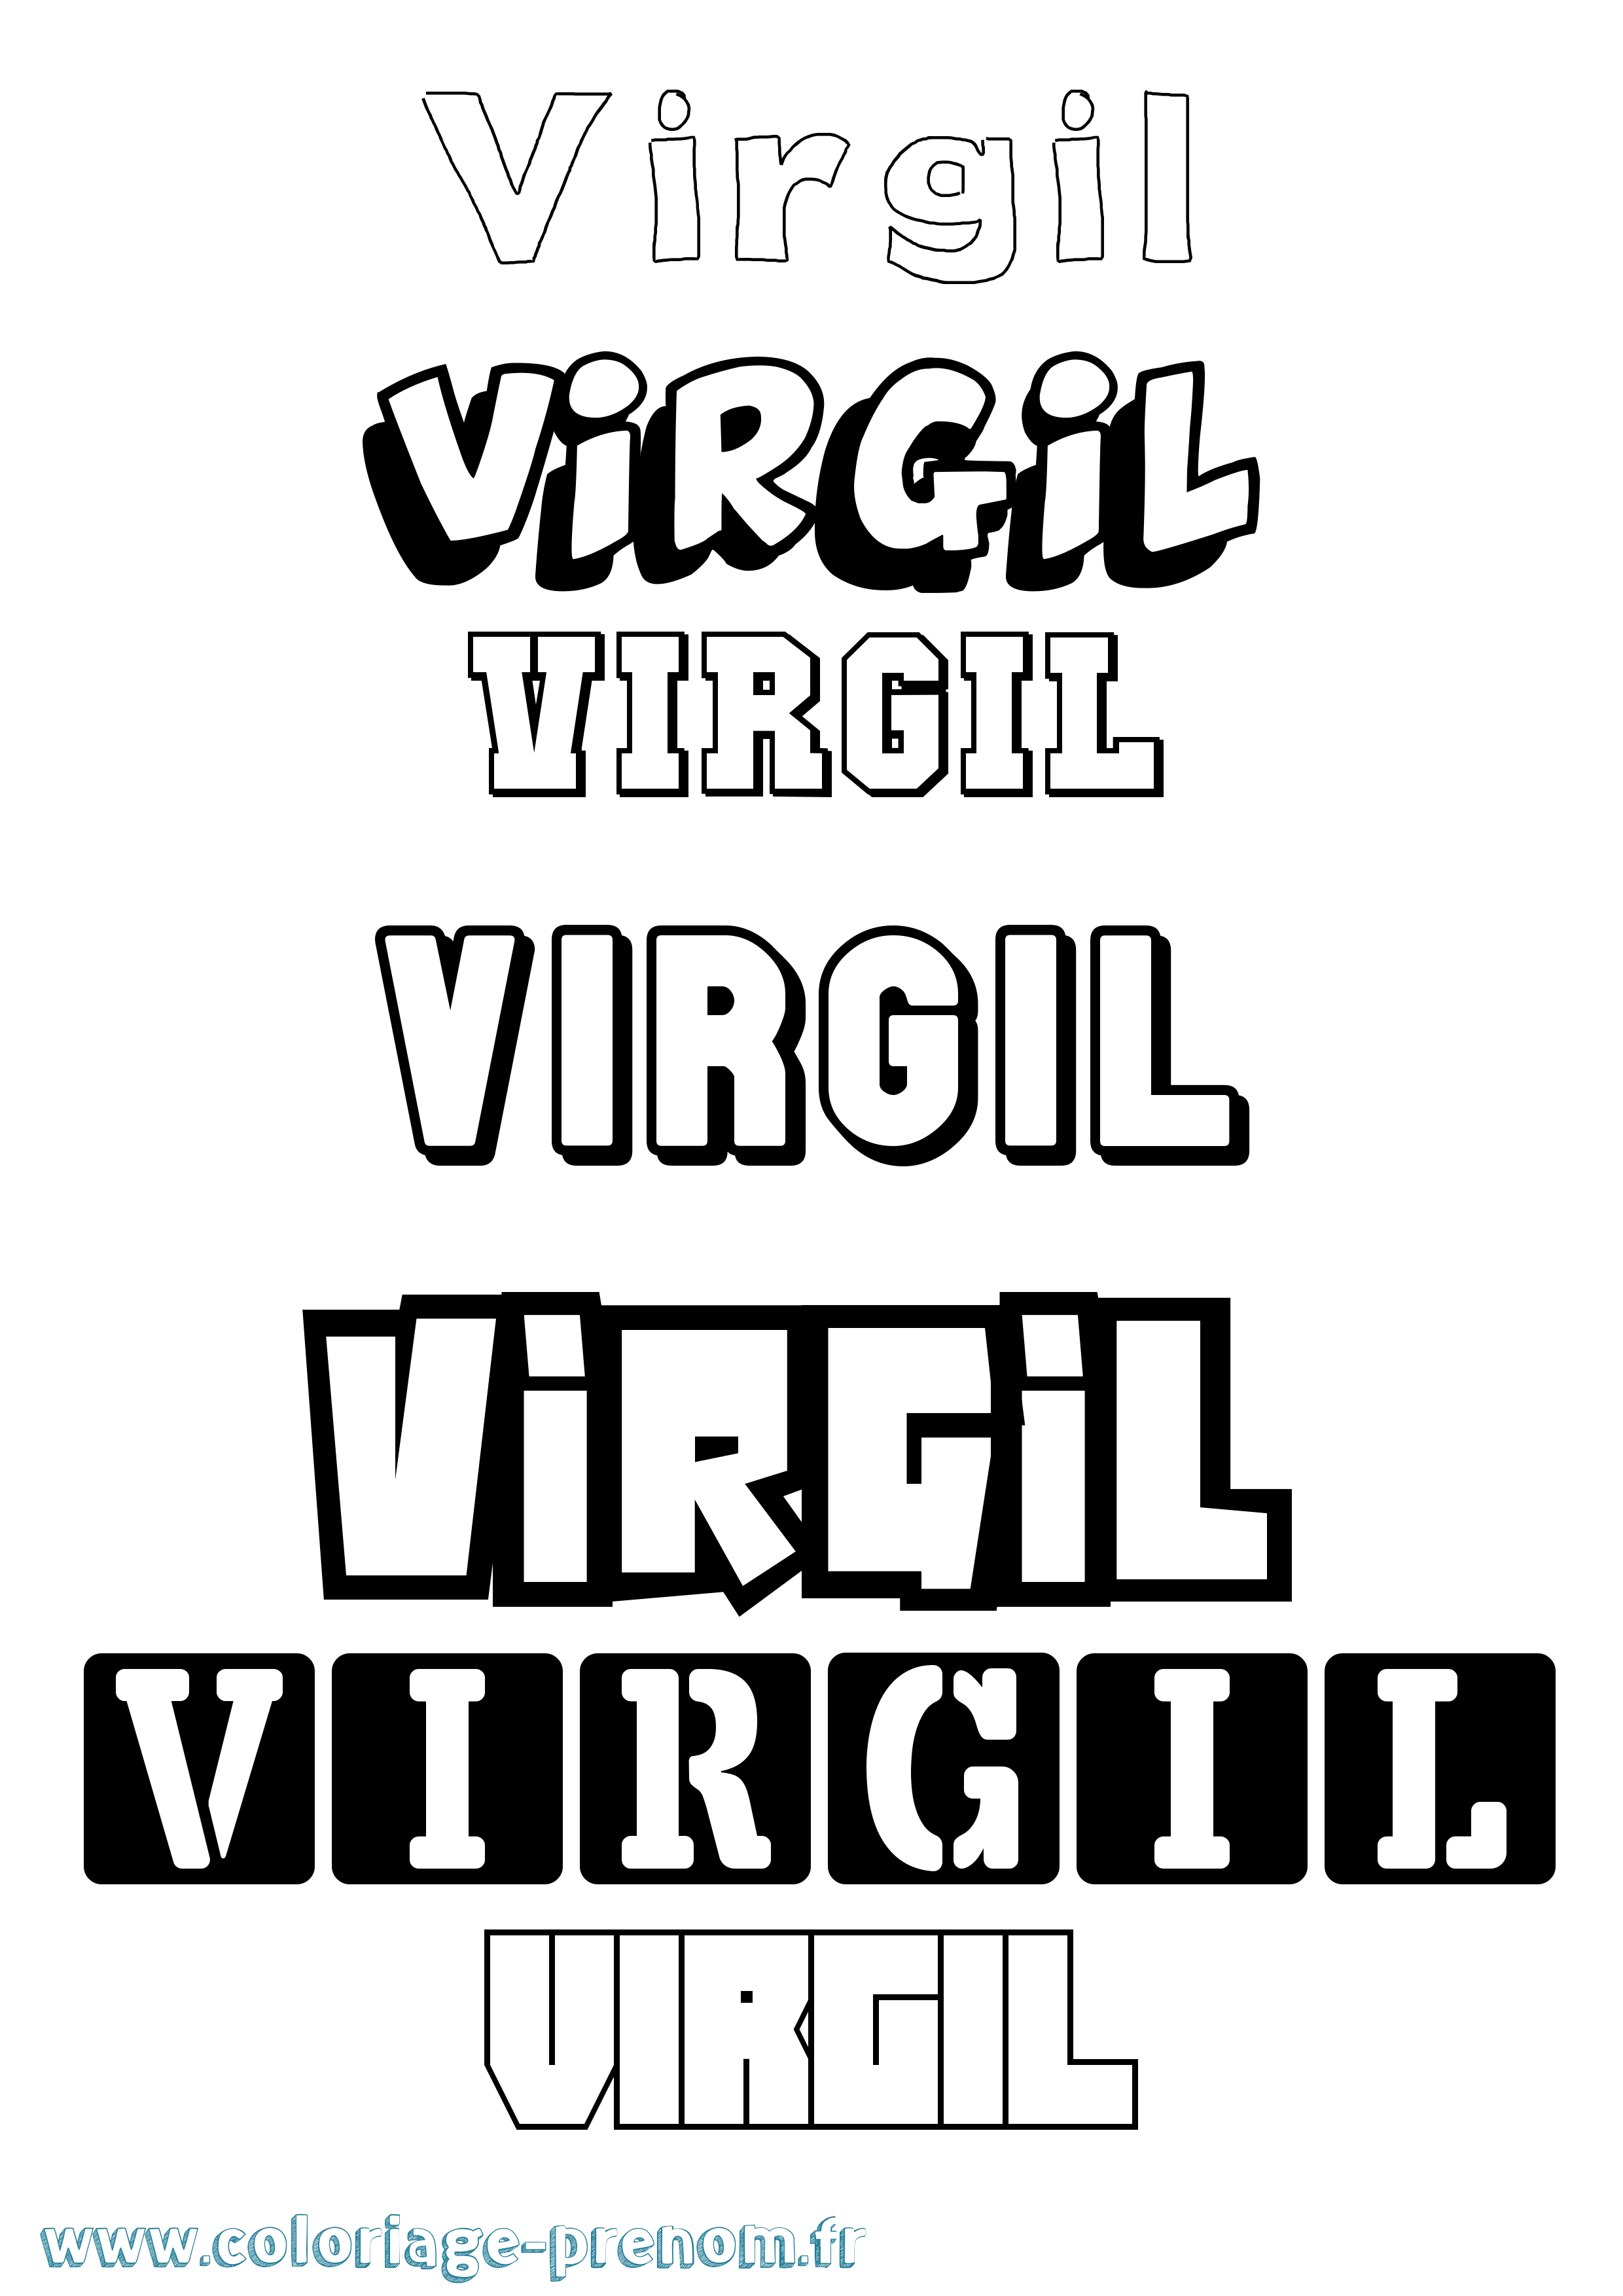 Coloriage prénom Virgil